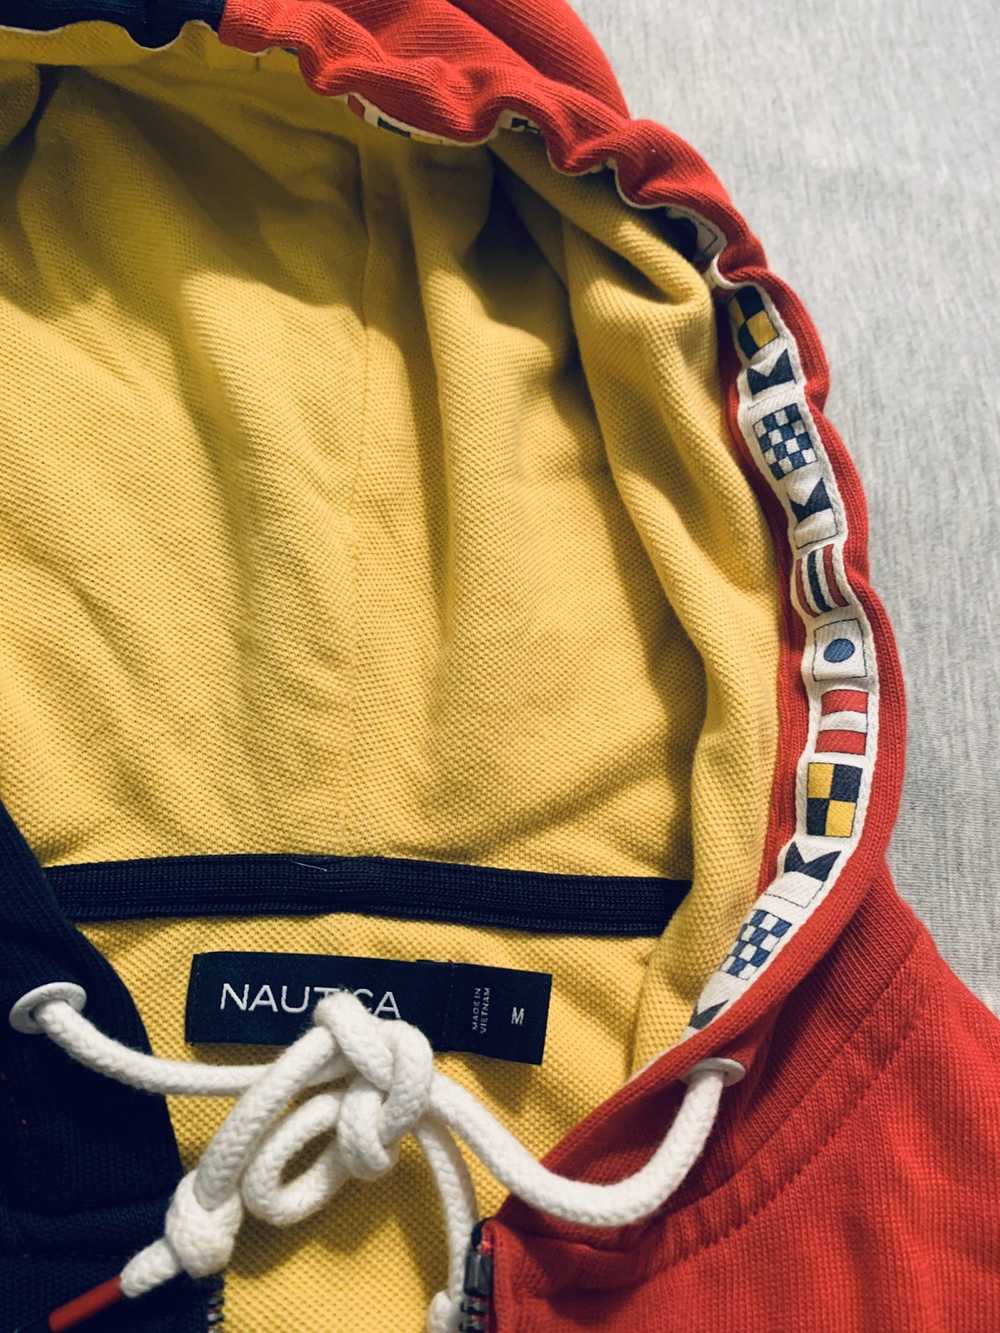 Nautica Nautica Sailing Gear Vintage Sweatshirt - image 5